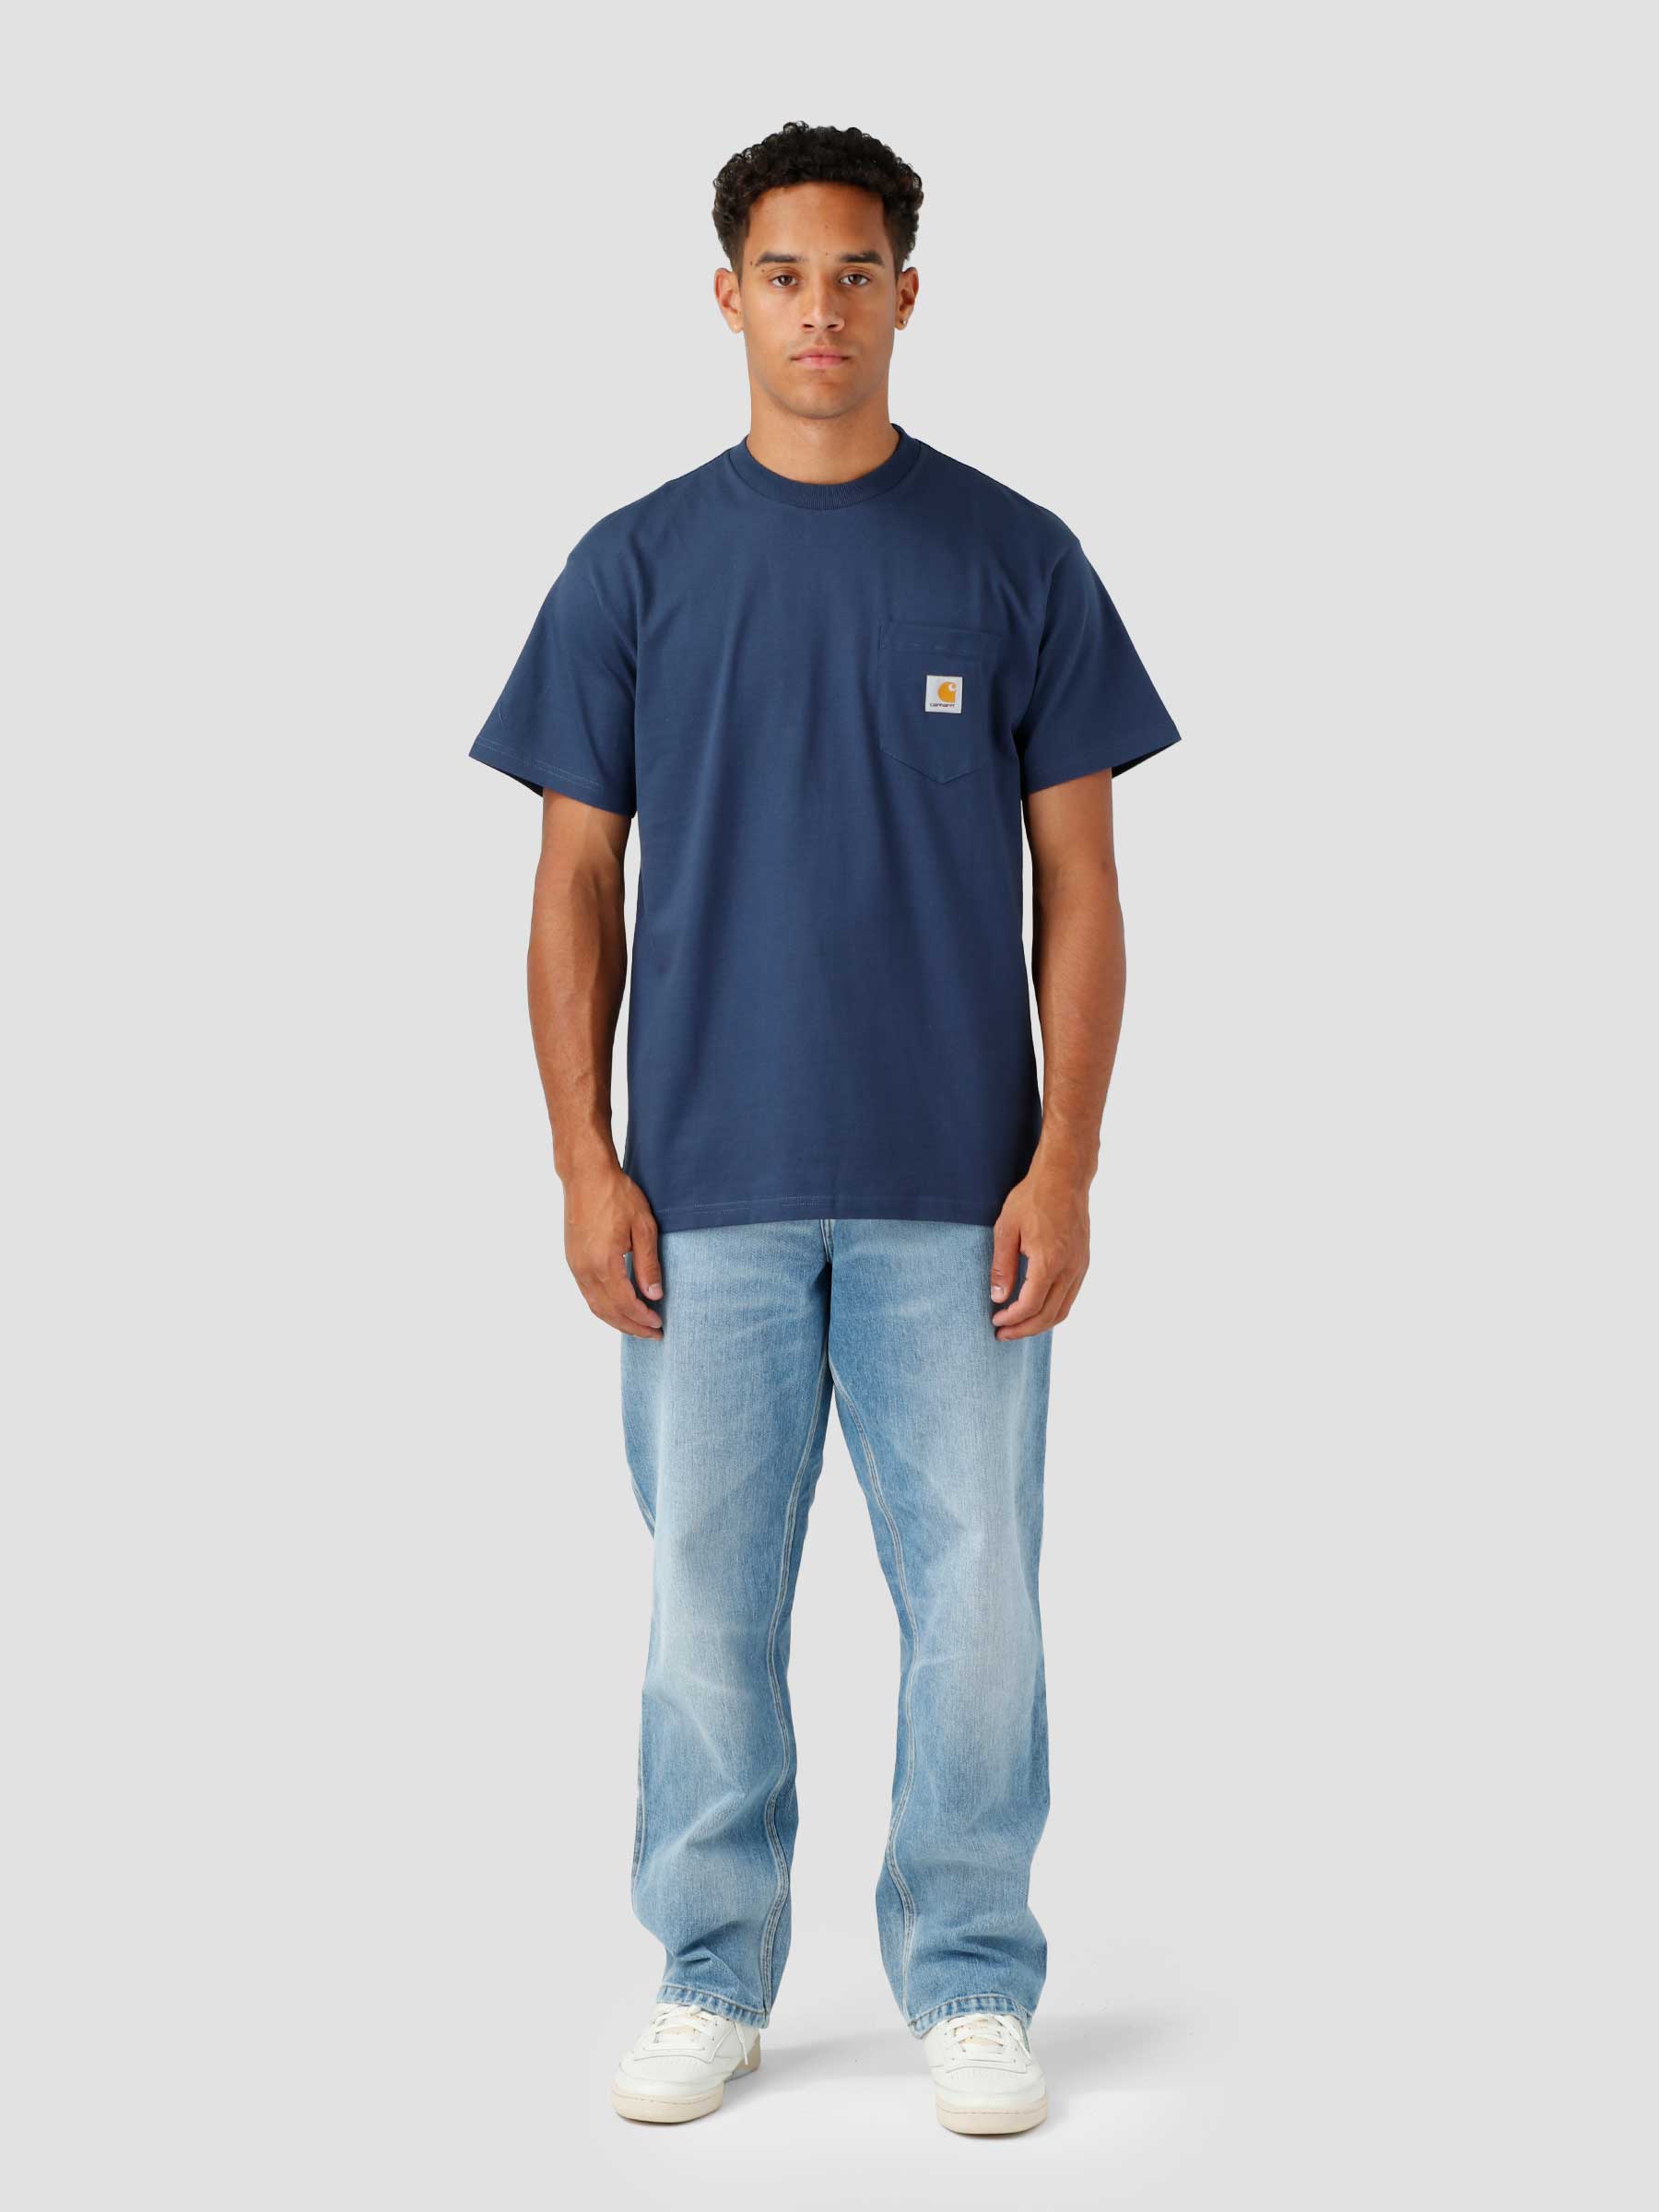 Local Pocket T-Shirt Enzian Storm Blue I030672-0Z0XX